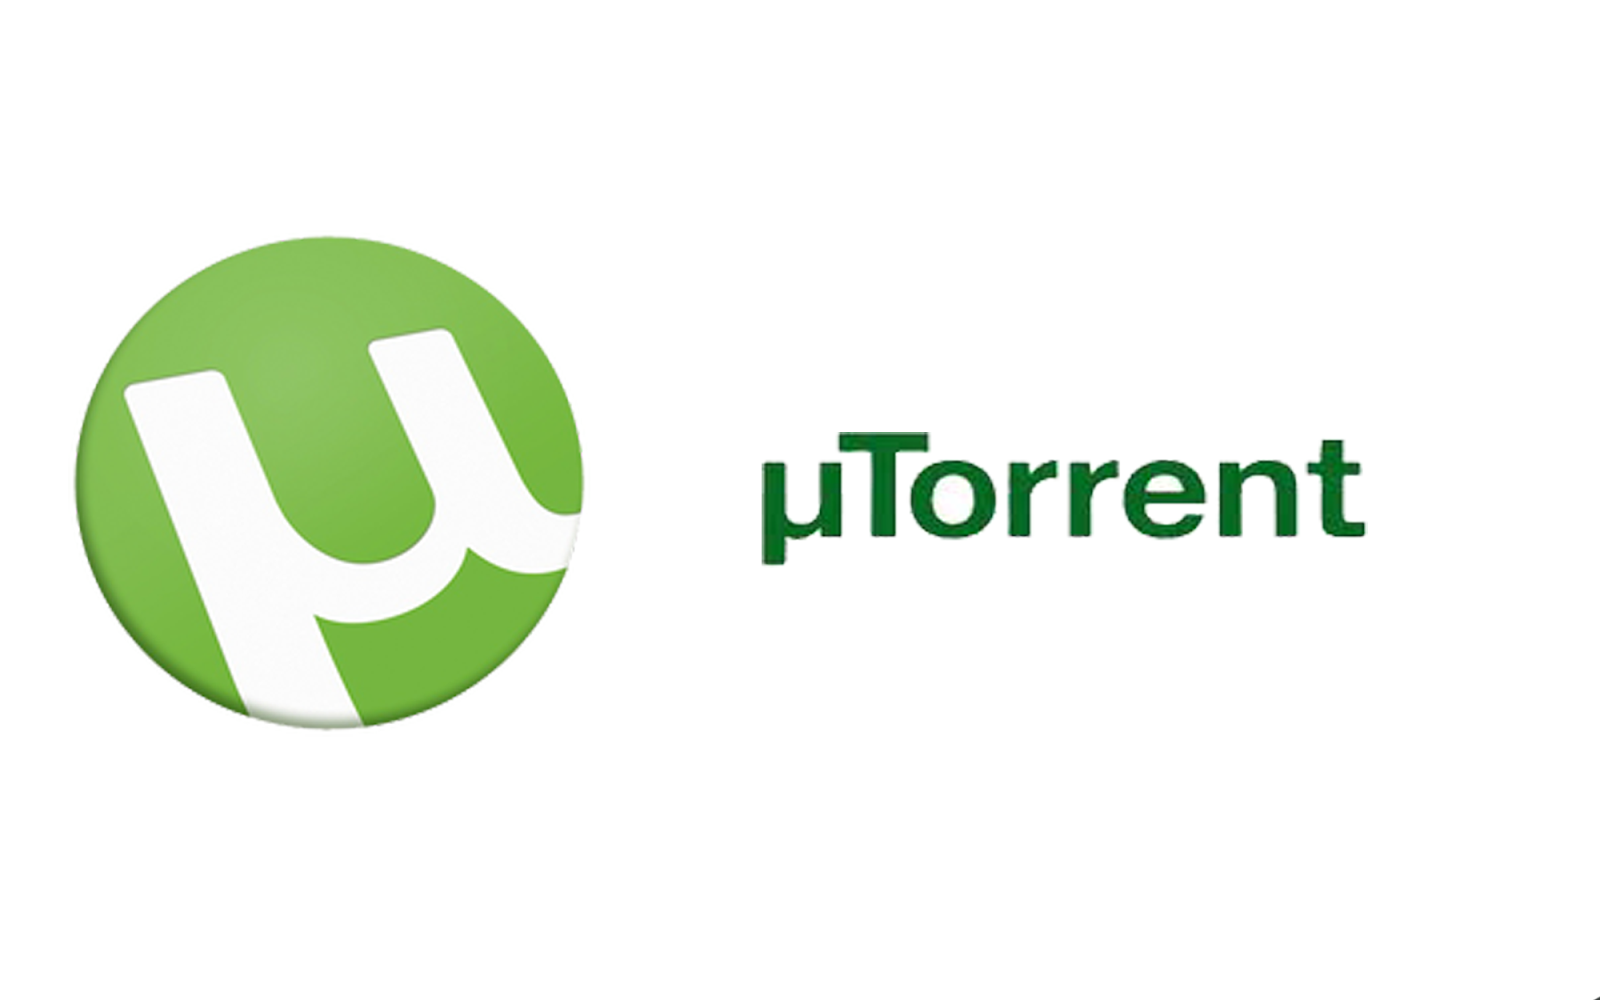 Utorrent com intl. Utorrent картинки. Utorrent логотип. Ярлык utorrent. Значок utorrent ICO.